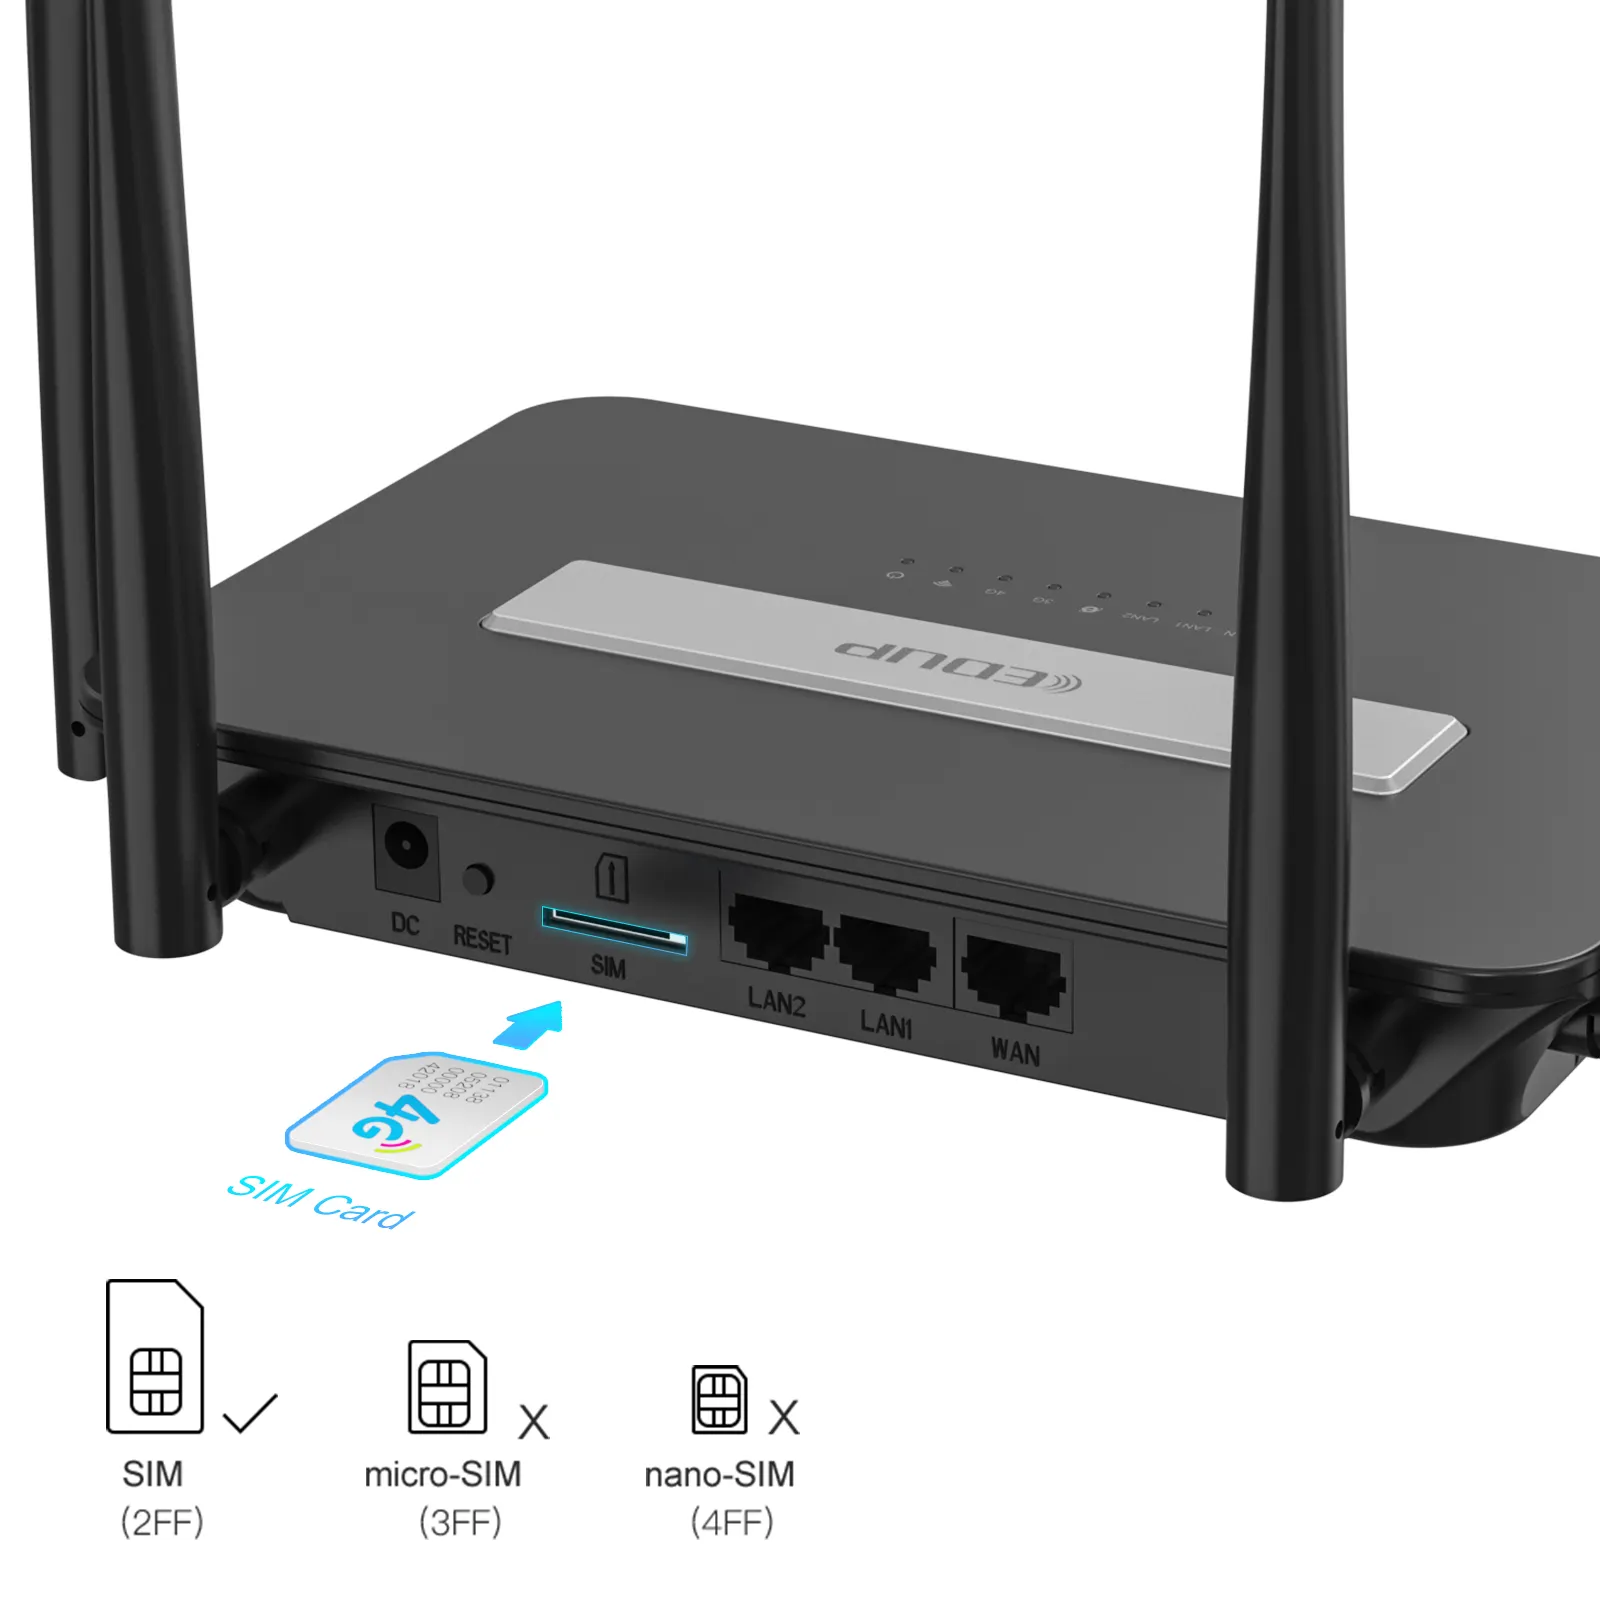 Edup 300Mbps Wifi Router Cpe 4G Lte Modem Wifi Routers B310 Lte Cpe Wifi Router 4G Lte met Sim Card Slot